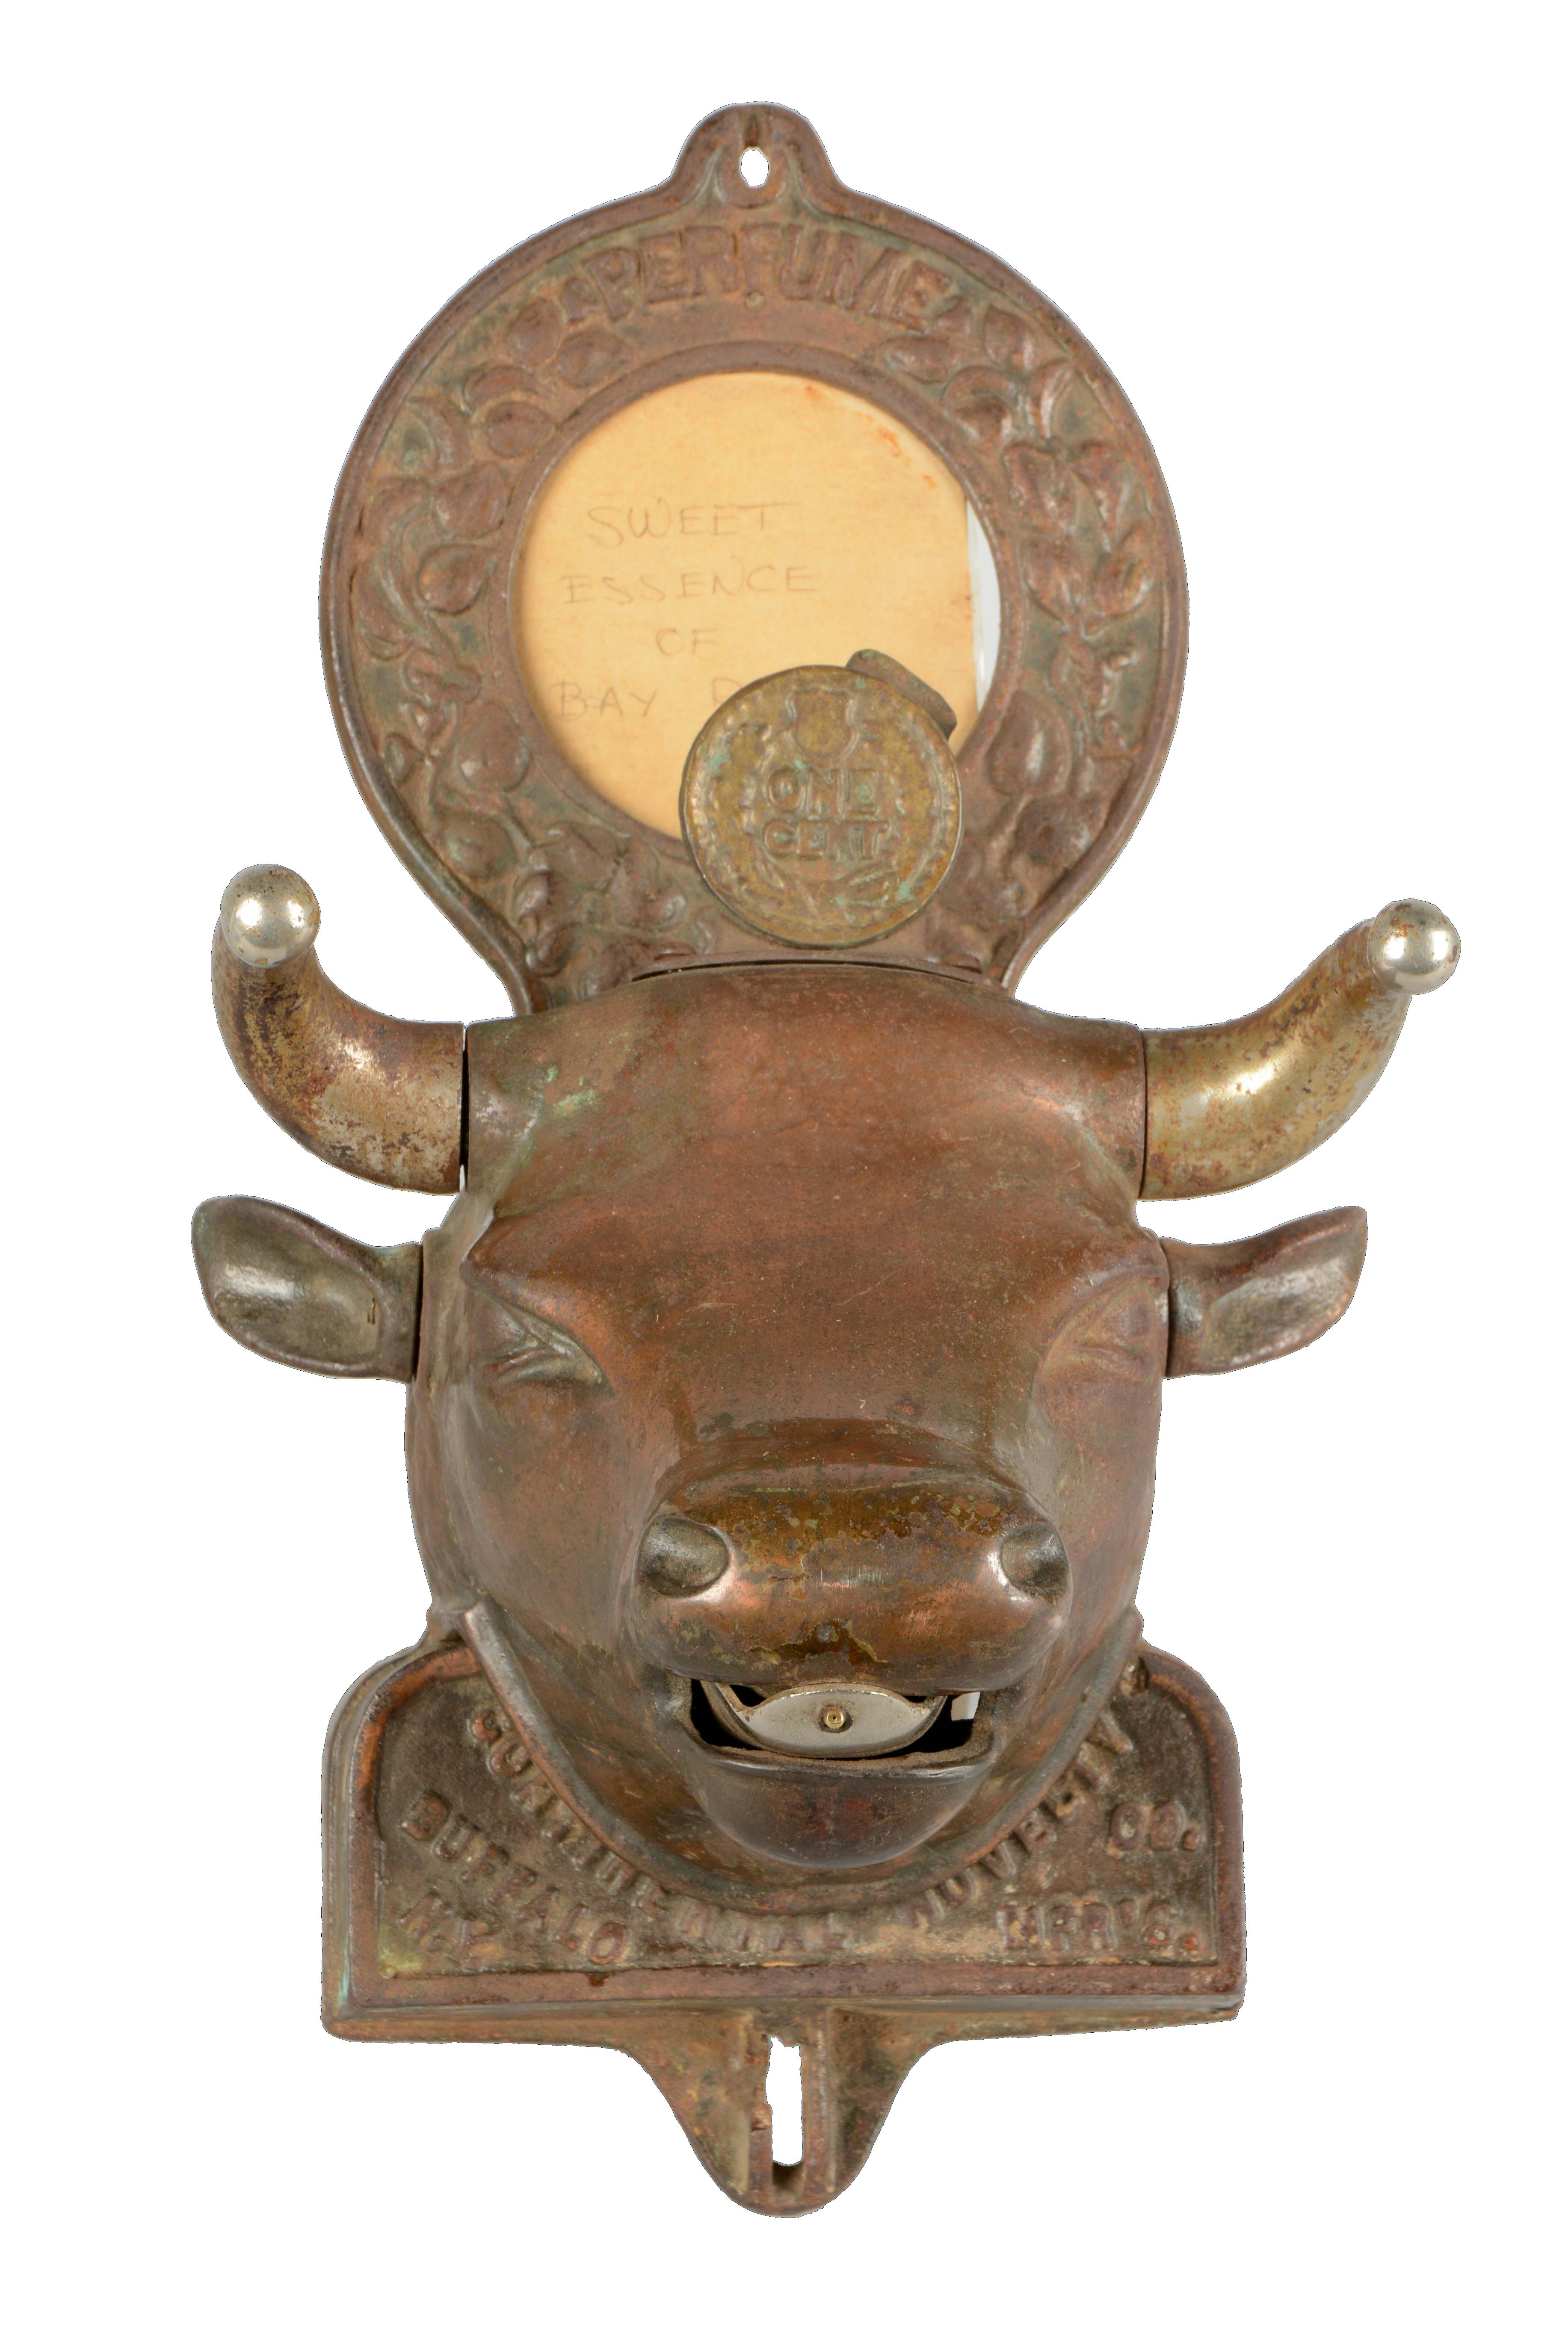 1¢ Continental Novelty Bull's Head Perfume Dispenser, estimated at $3,000-7,000.